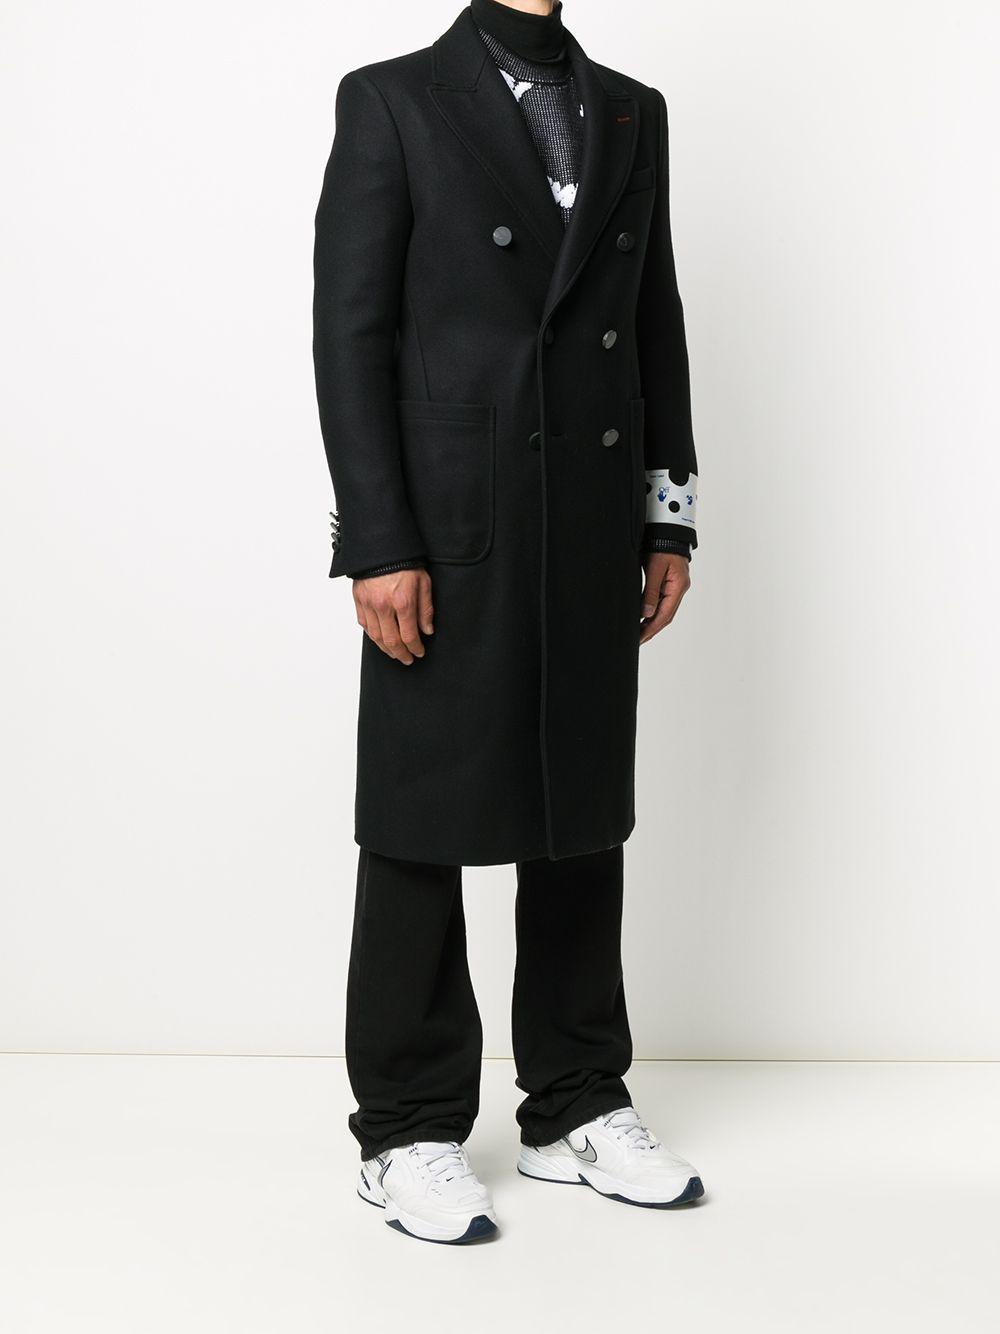 Off-White c/o Virgil Abloh Double-breasted Coat in Black for Men - Lyst